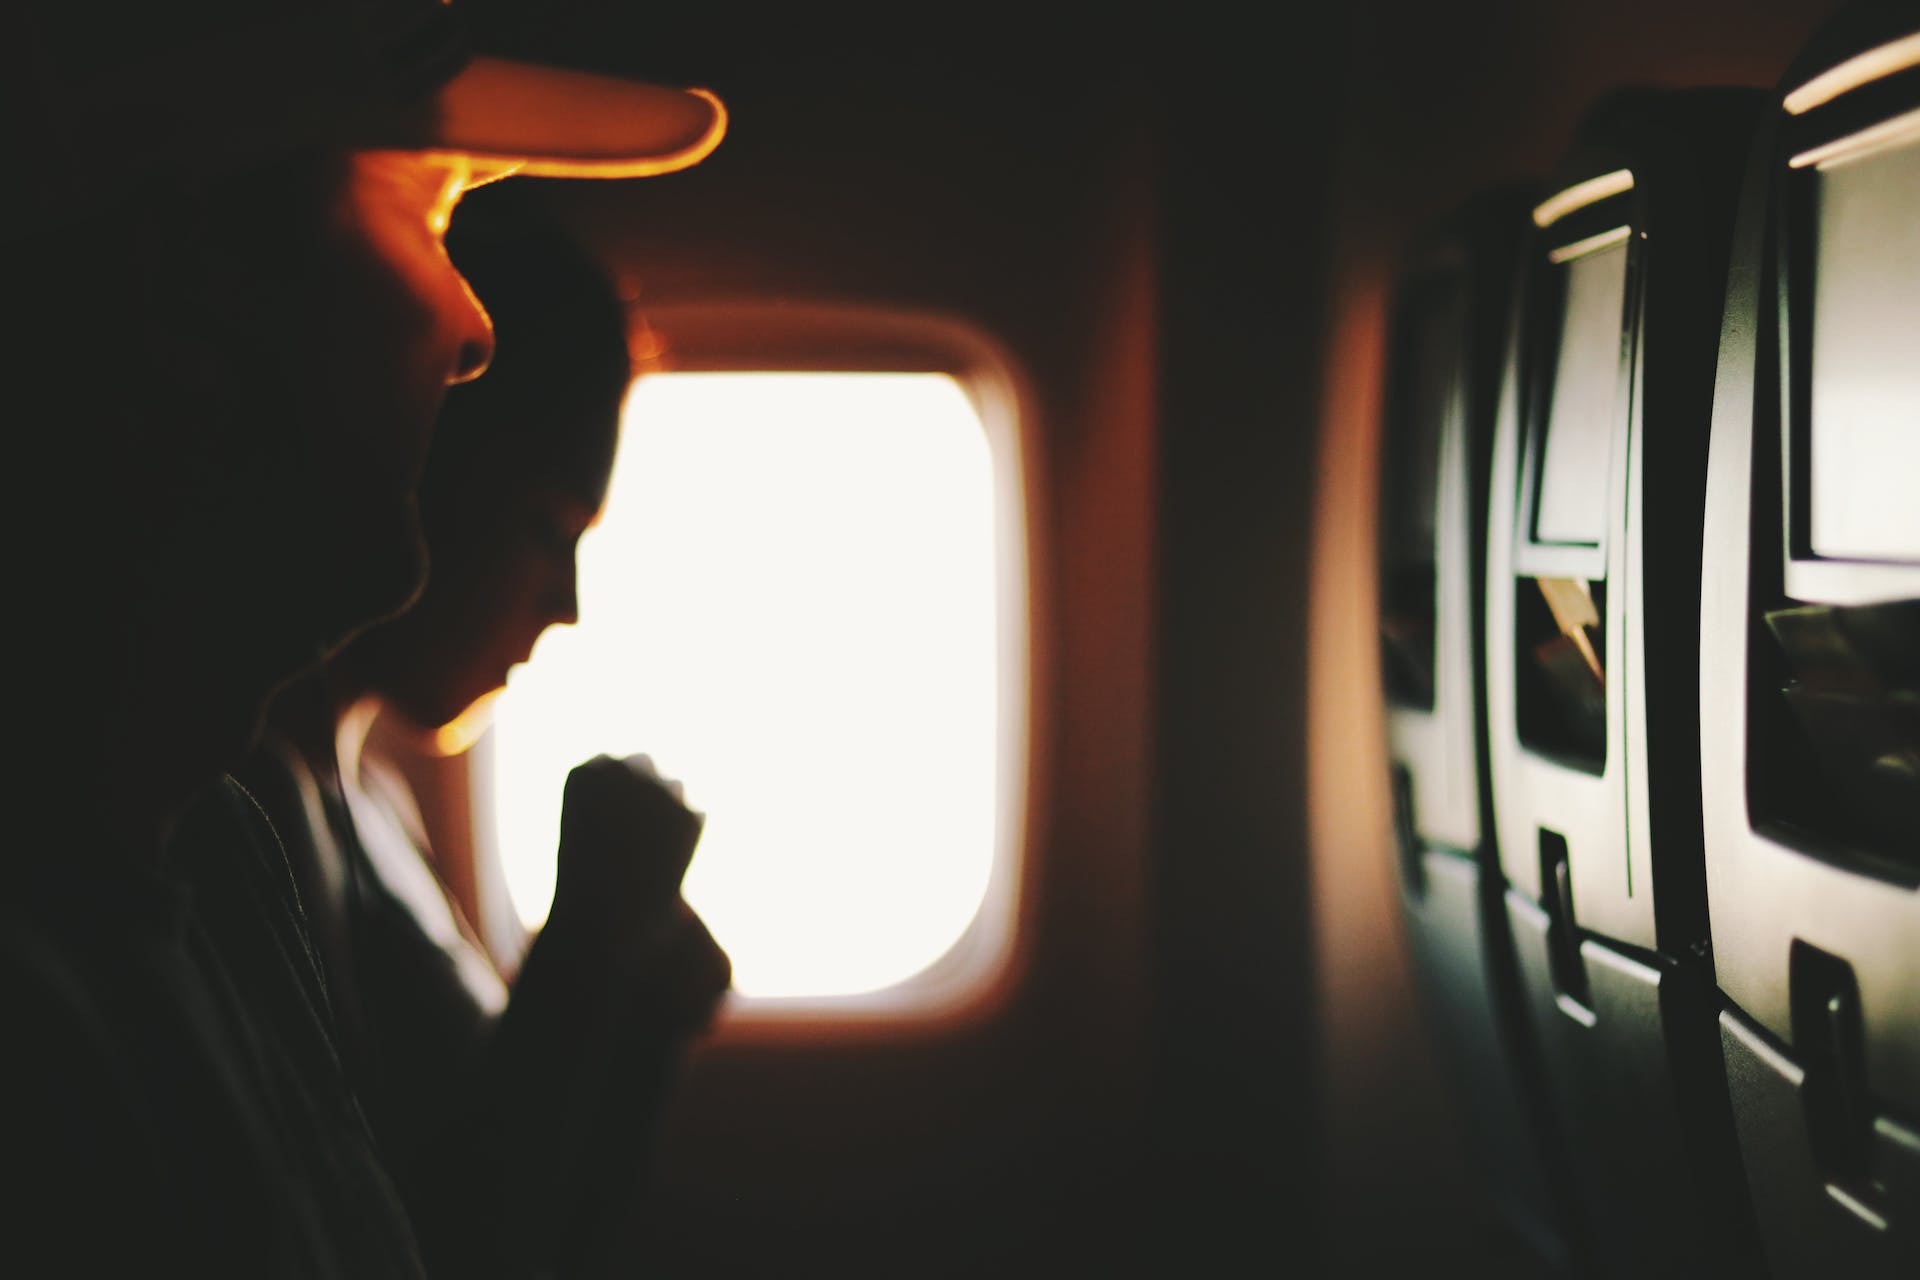 People sitting in an airplane | Source: Pexels